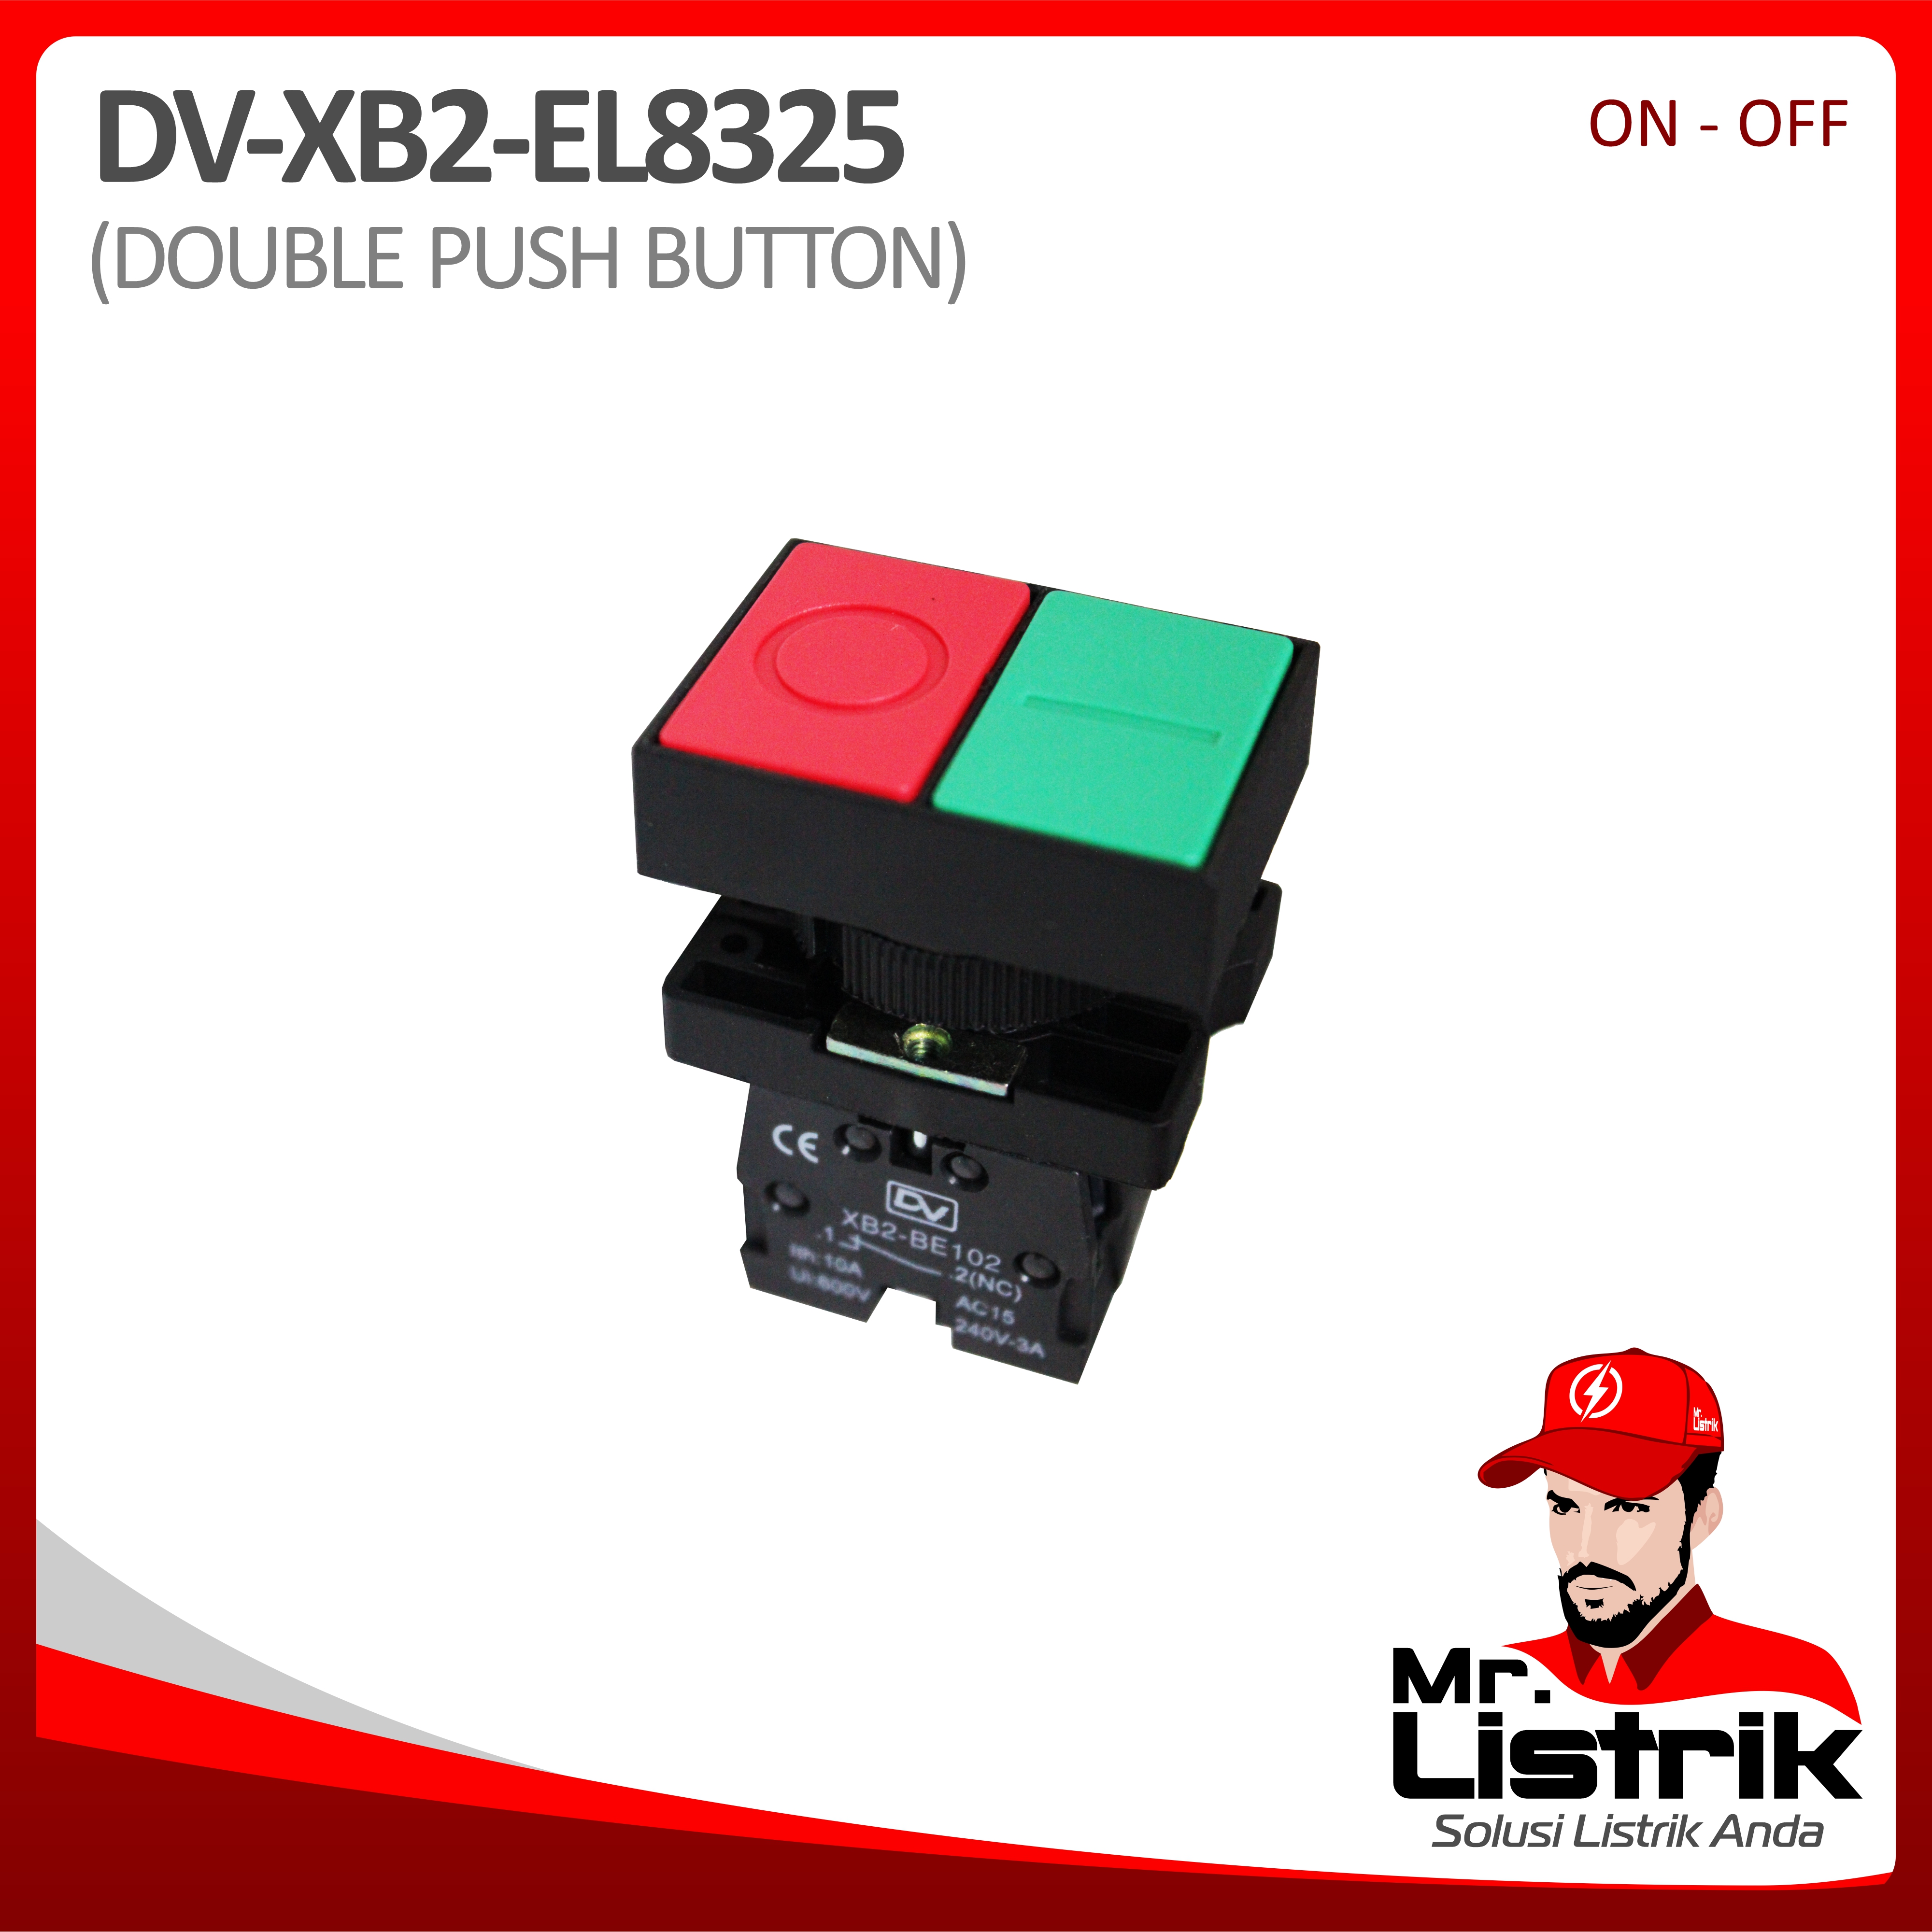 Double Push Button 1NO+1NC Plastic Modular XB2-EL8325 - On Off